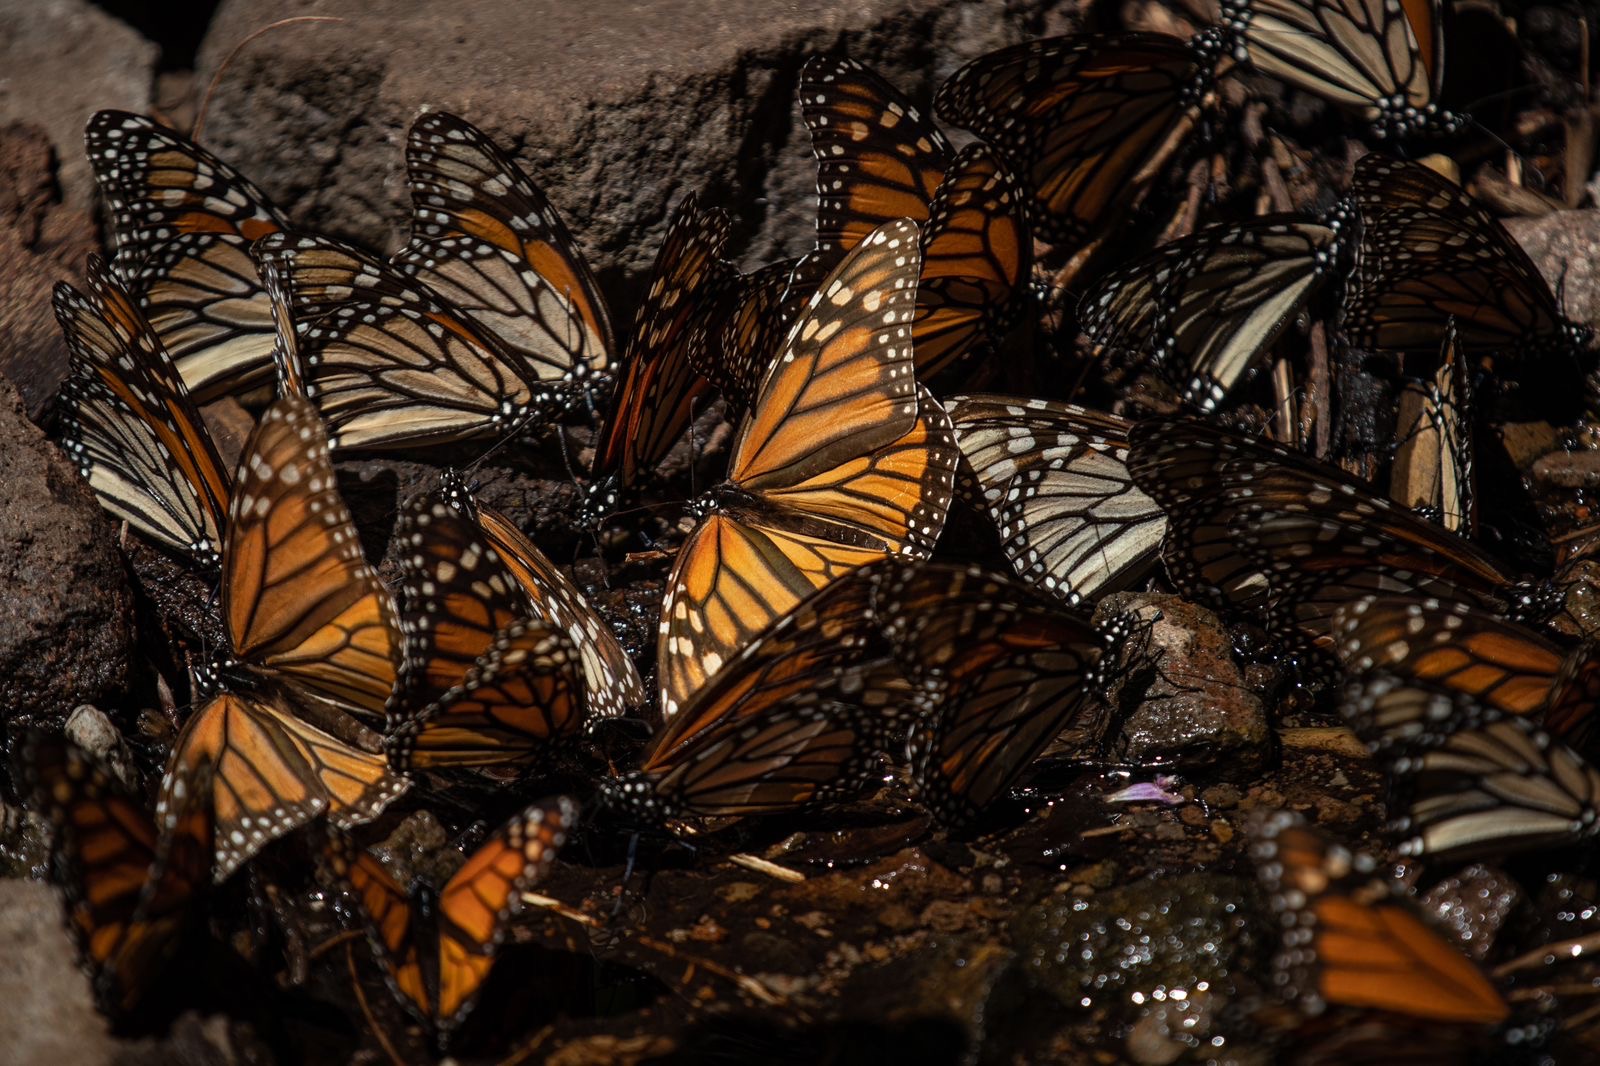 Disfruta el esplendor de la Mariposa Monarca en los bosques michoacanos